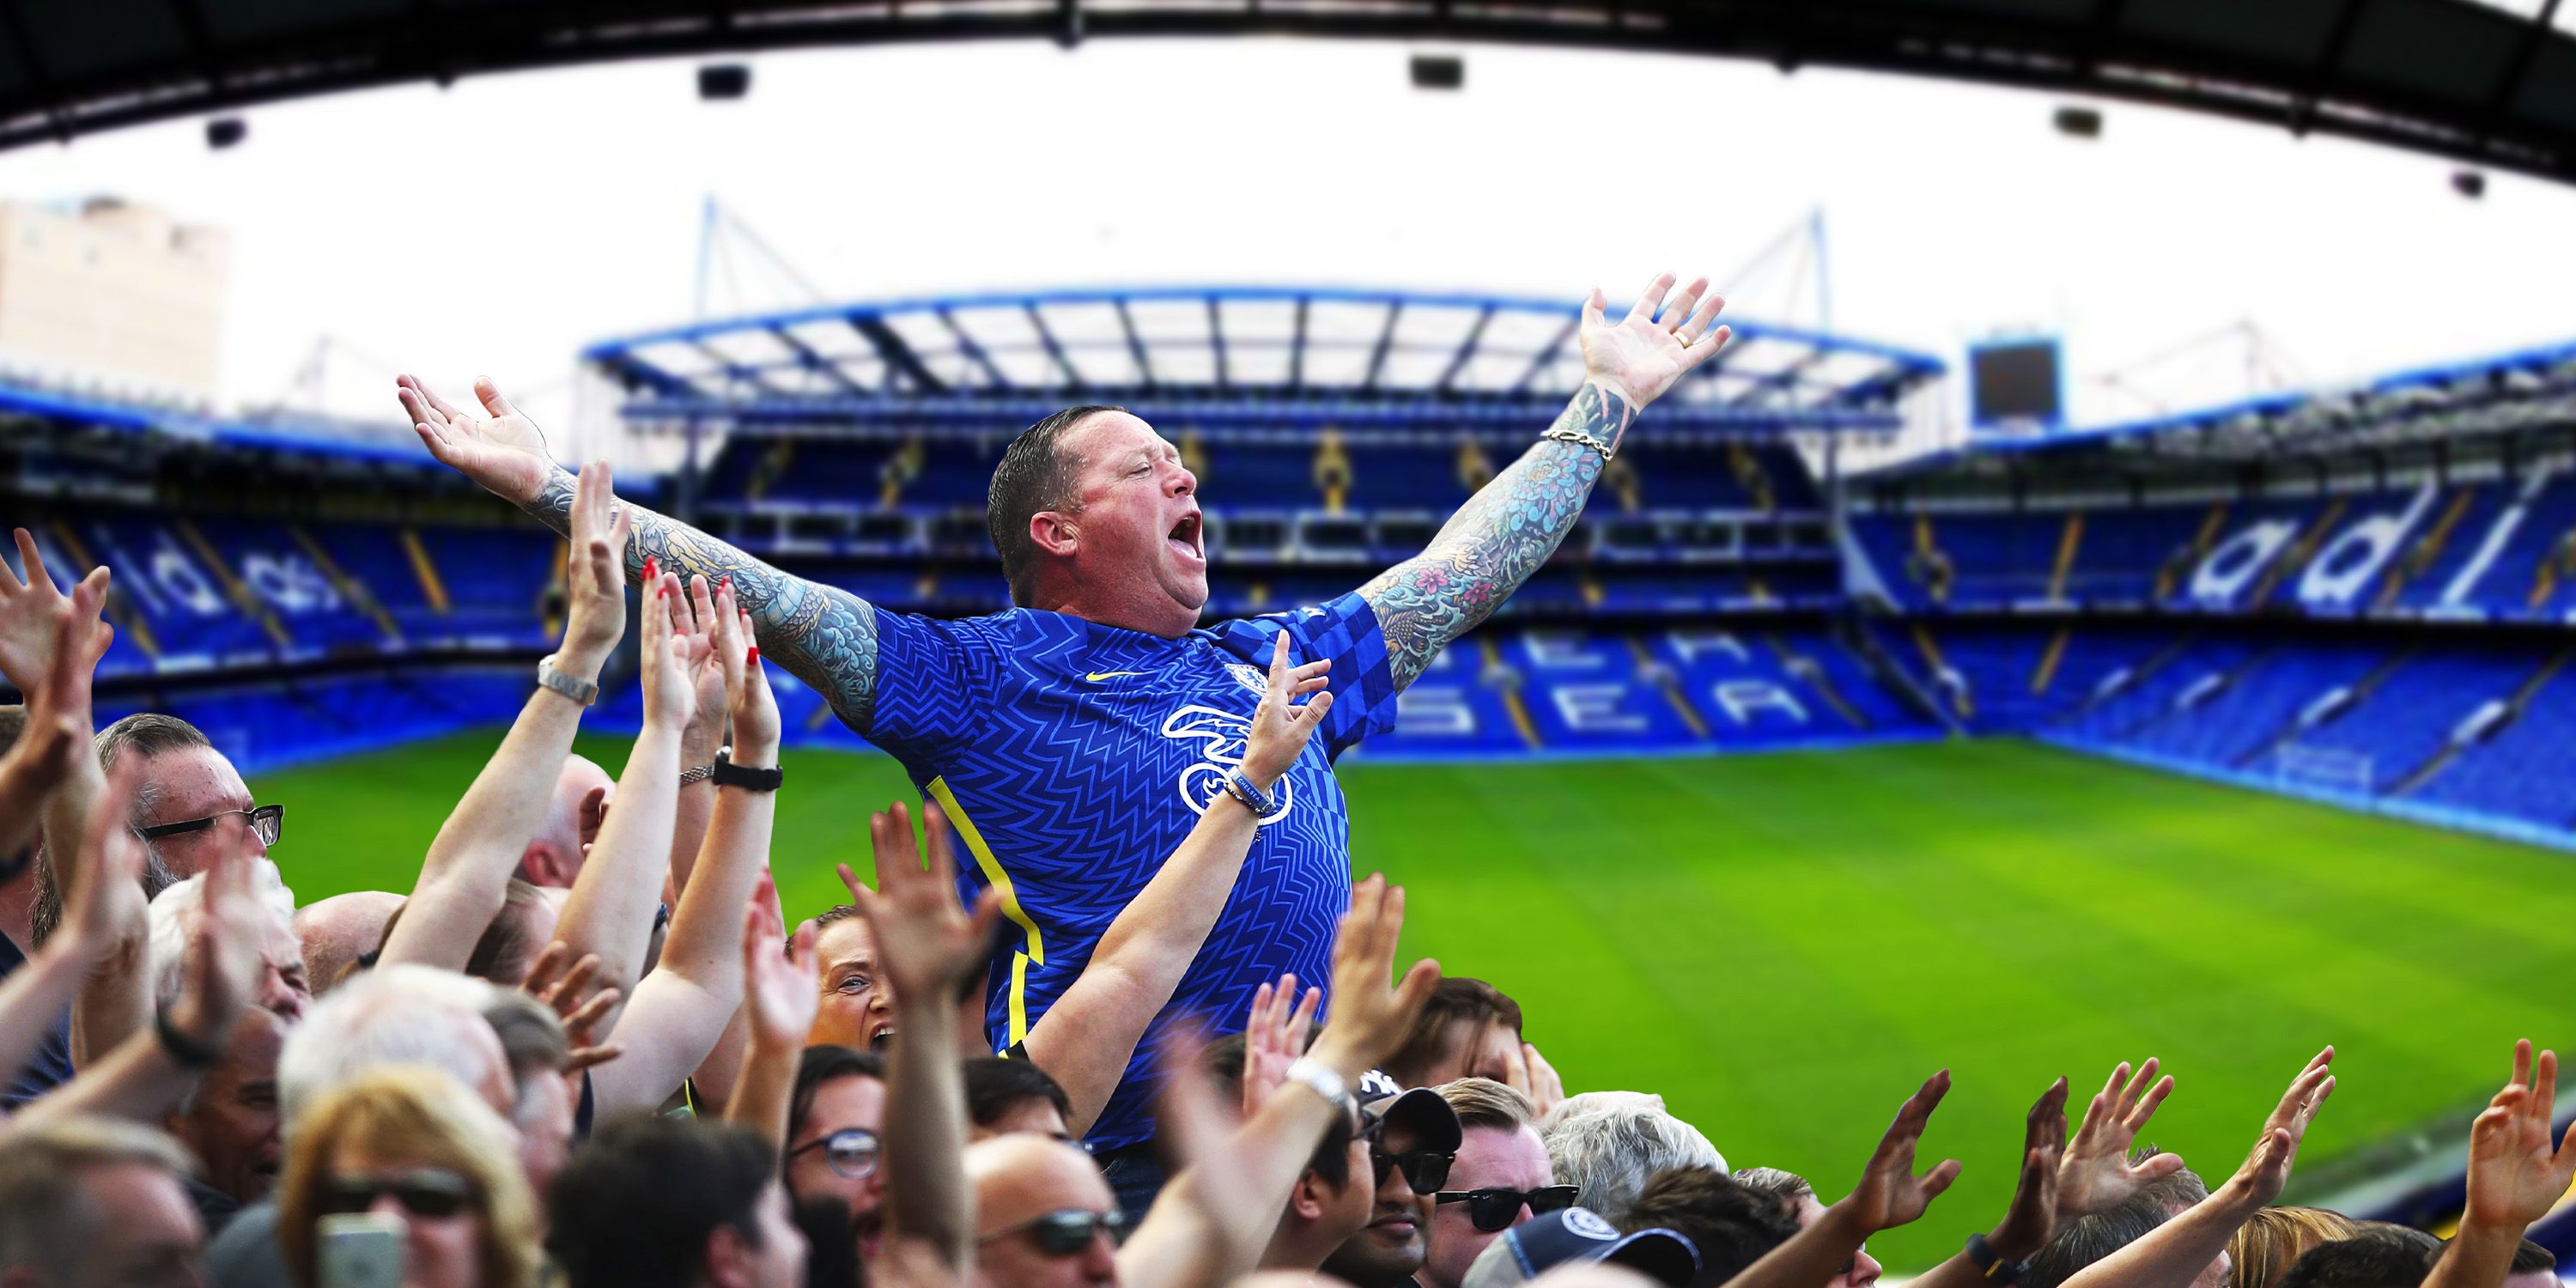 Chelsea fans singing at Stamford Bridge.